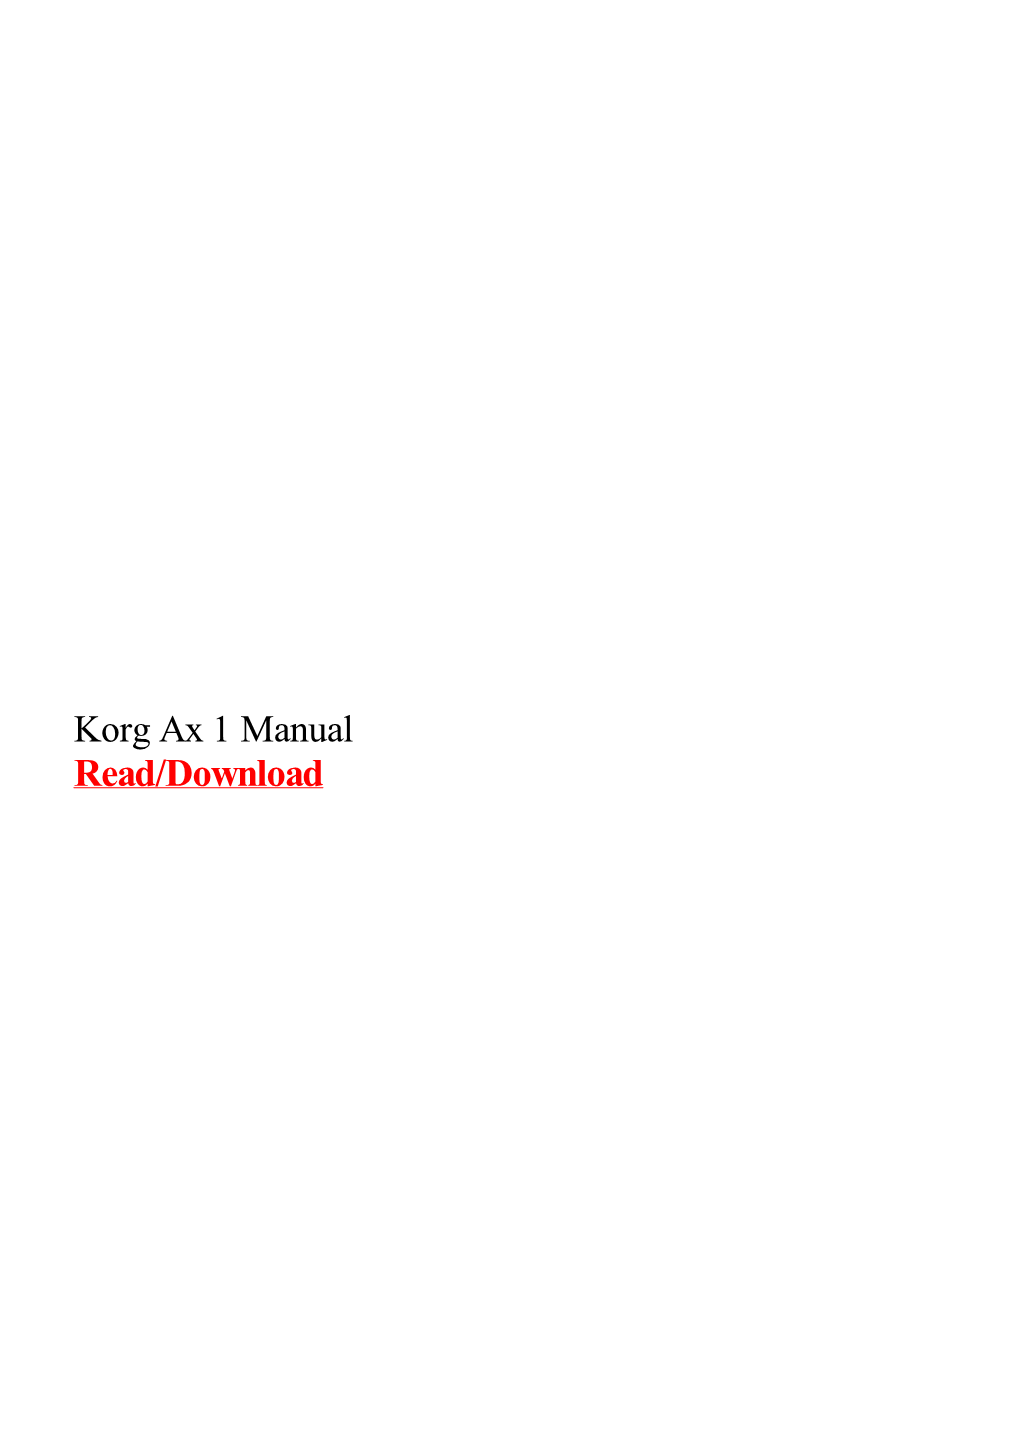 Korg-Ax-1-Manual.Pdf